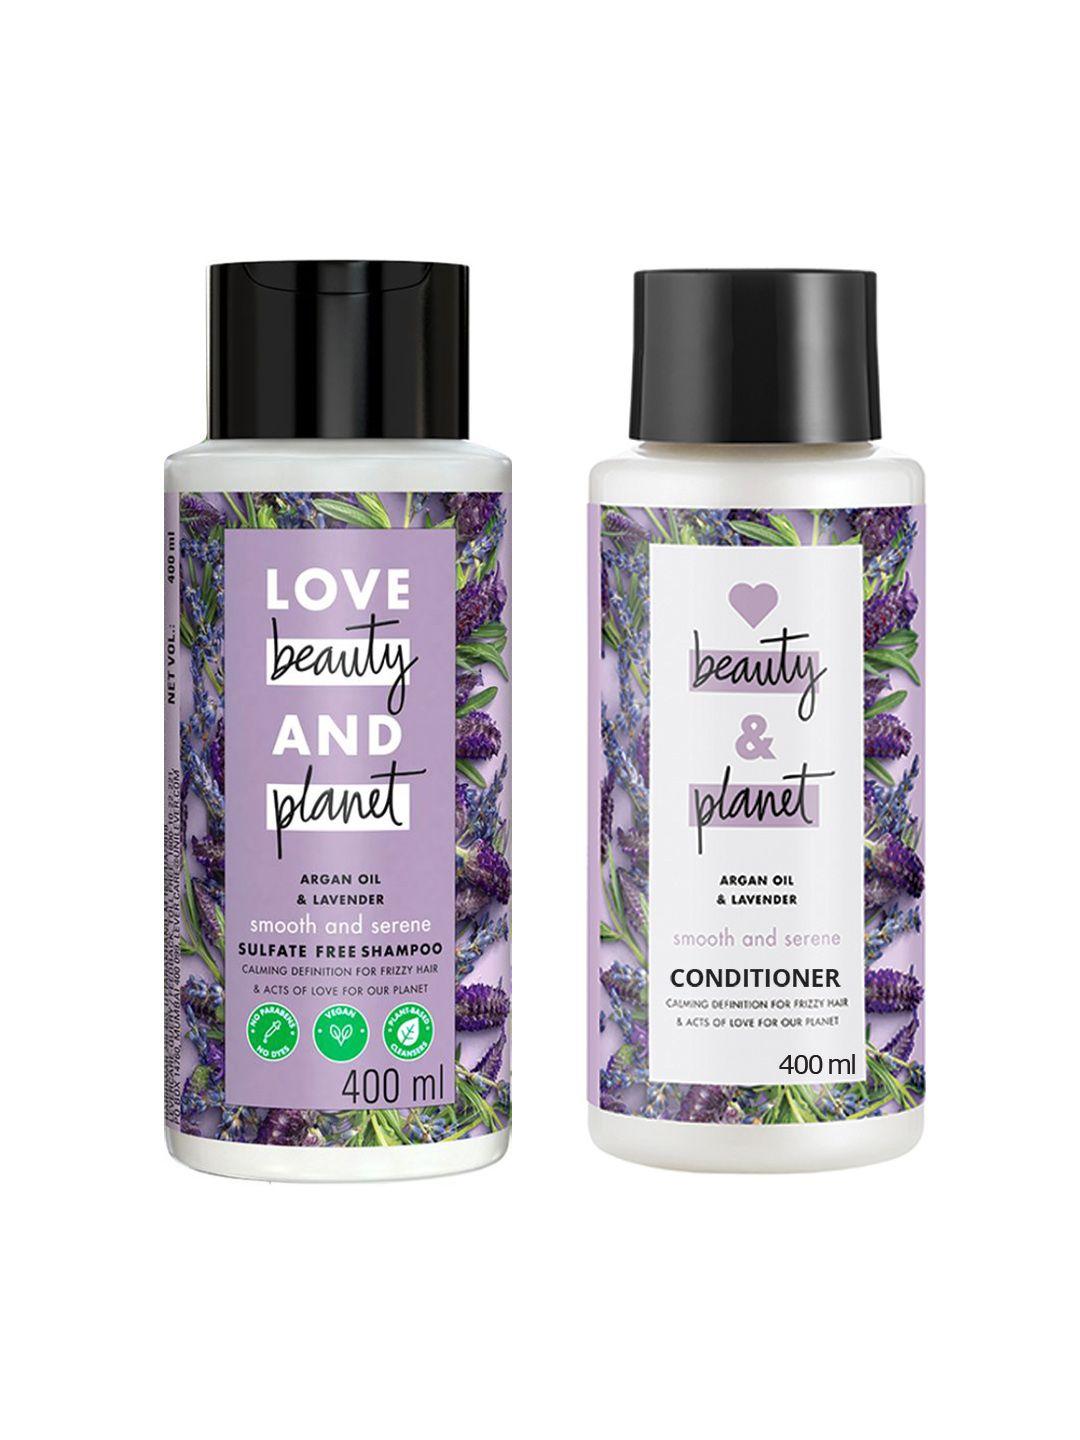 love beauty & planet argan oil & lavender shampoo & conditioner set - 400ml each